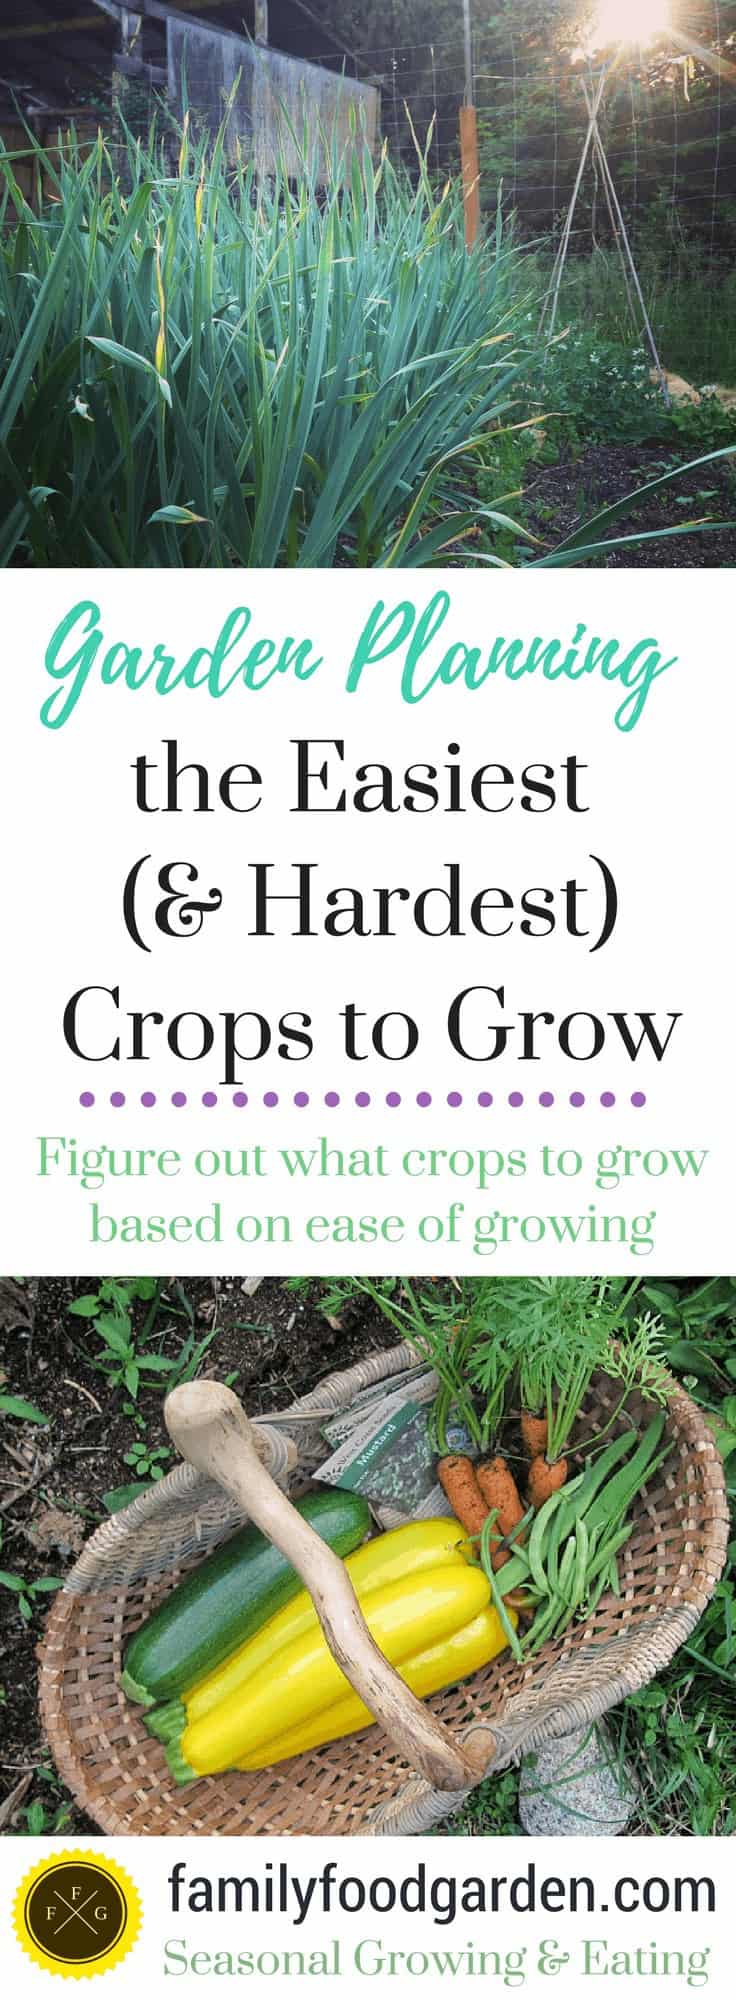 Garden Planning the Easiest (& Hardest) Crops to Grow